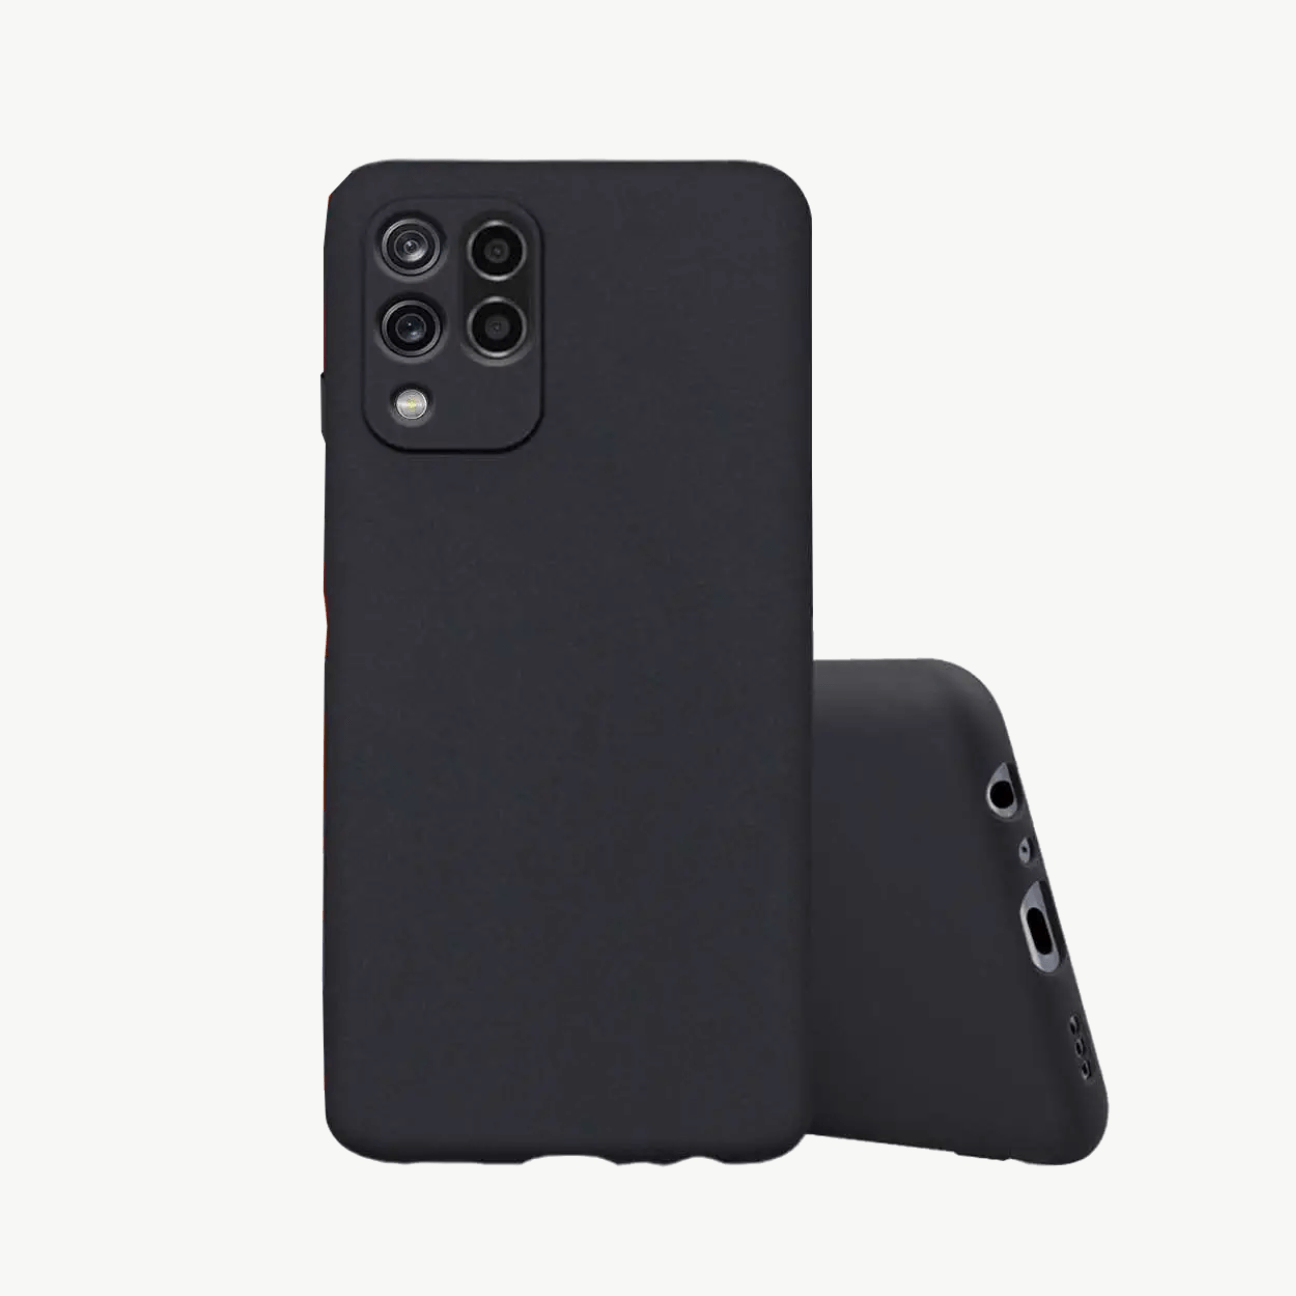 Vivo S1 Pro Black Soft Silicone Phone Case Image